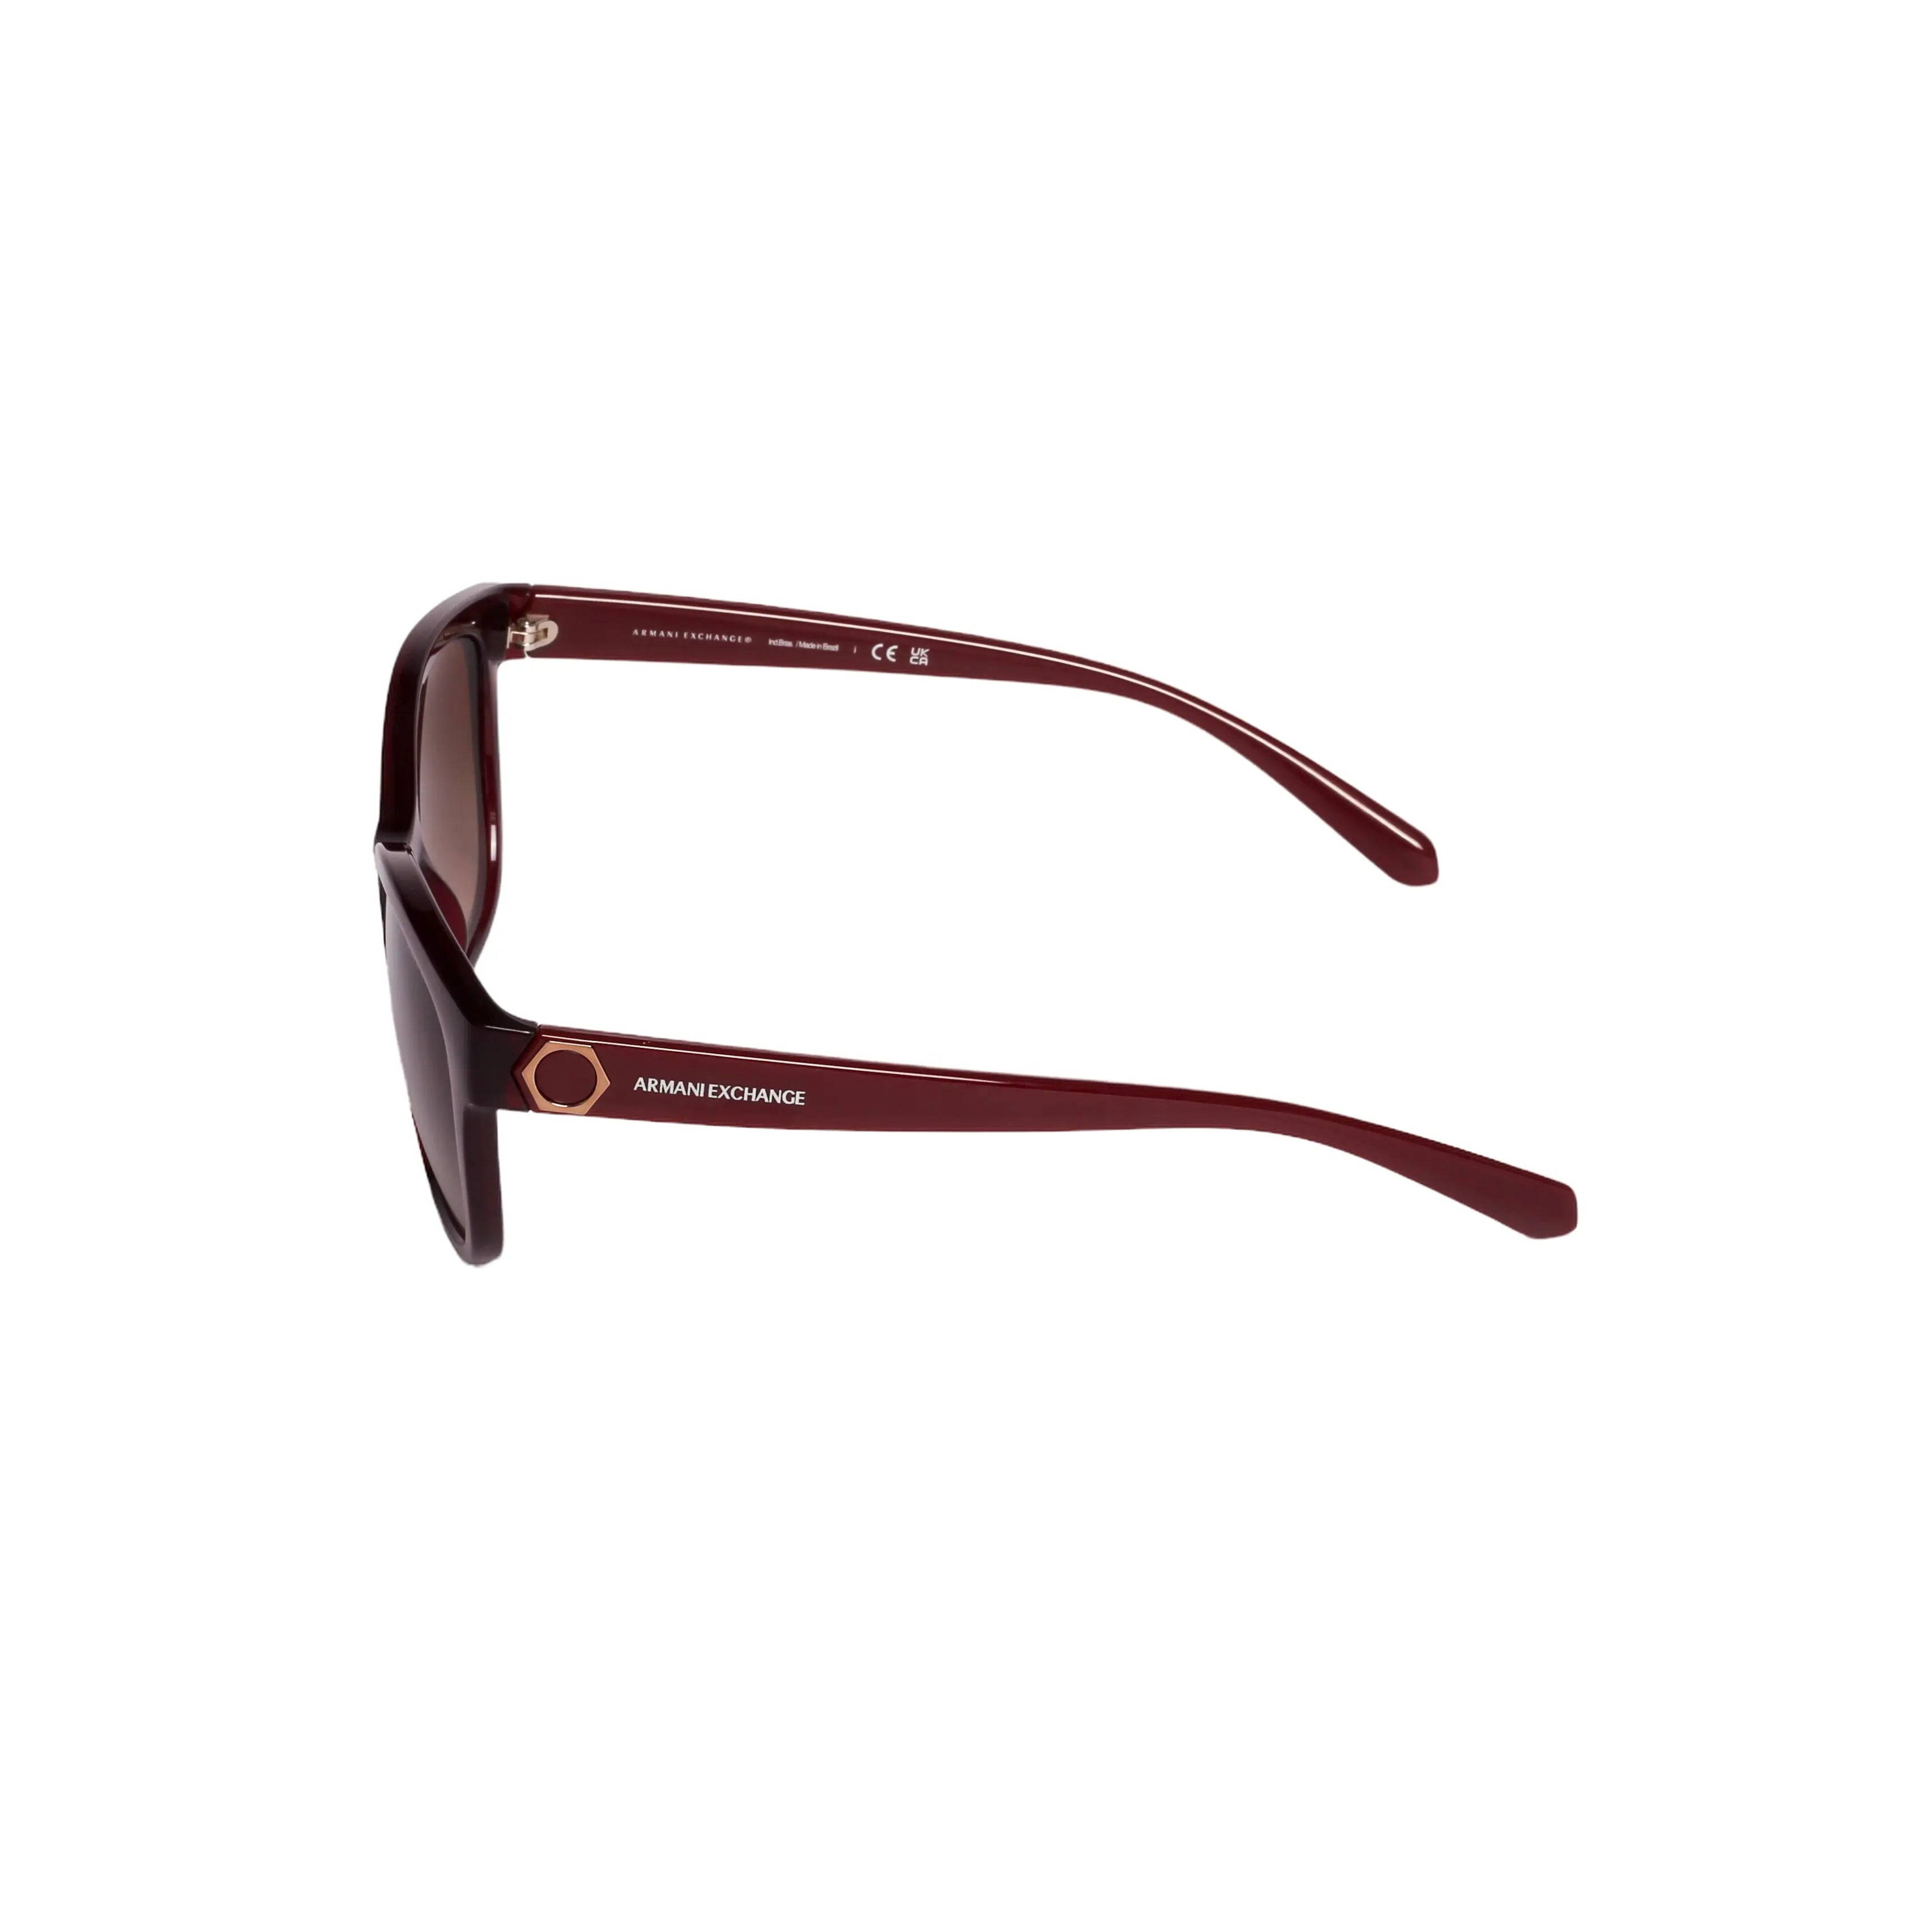 Armani Exchange-AX 4127-55-824 Sunglasses - Premium Sunglasses from Armani Exchange - Just Rs. 7990! Shop now at Laxmi Opticians